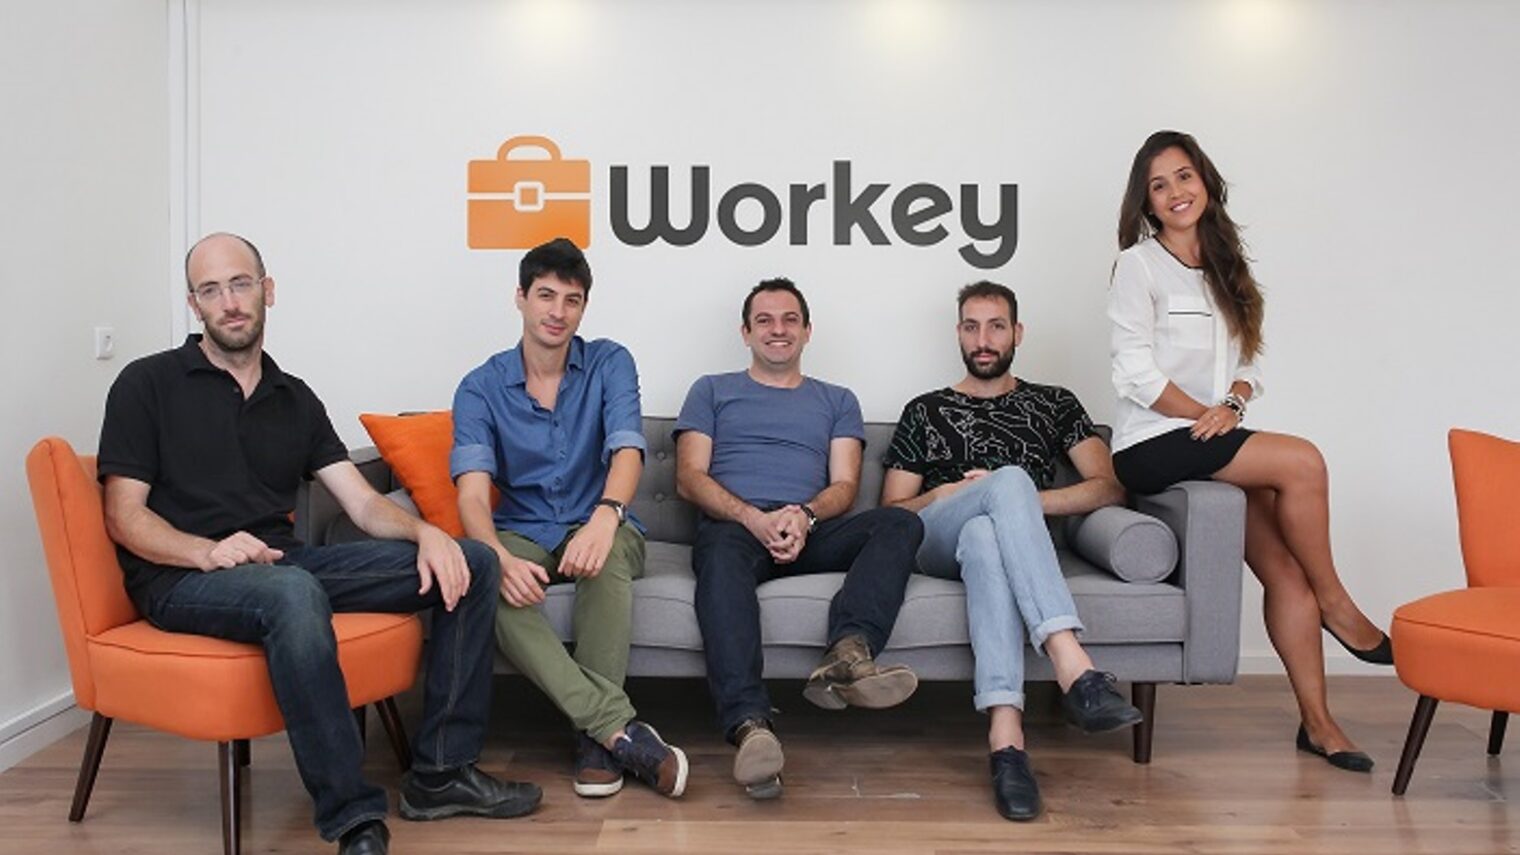 The Workey team. Photo by Omri Aharonov